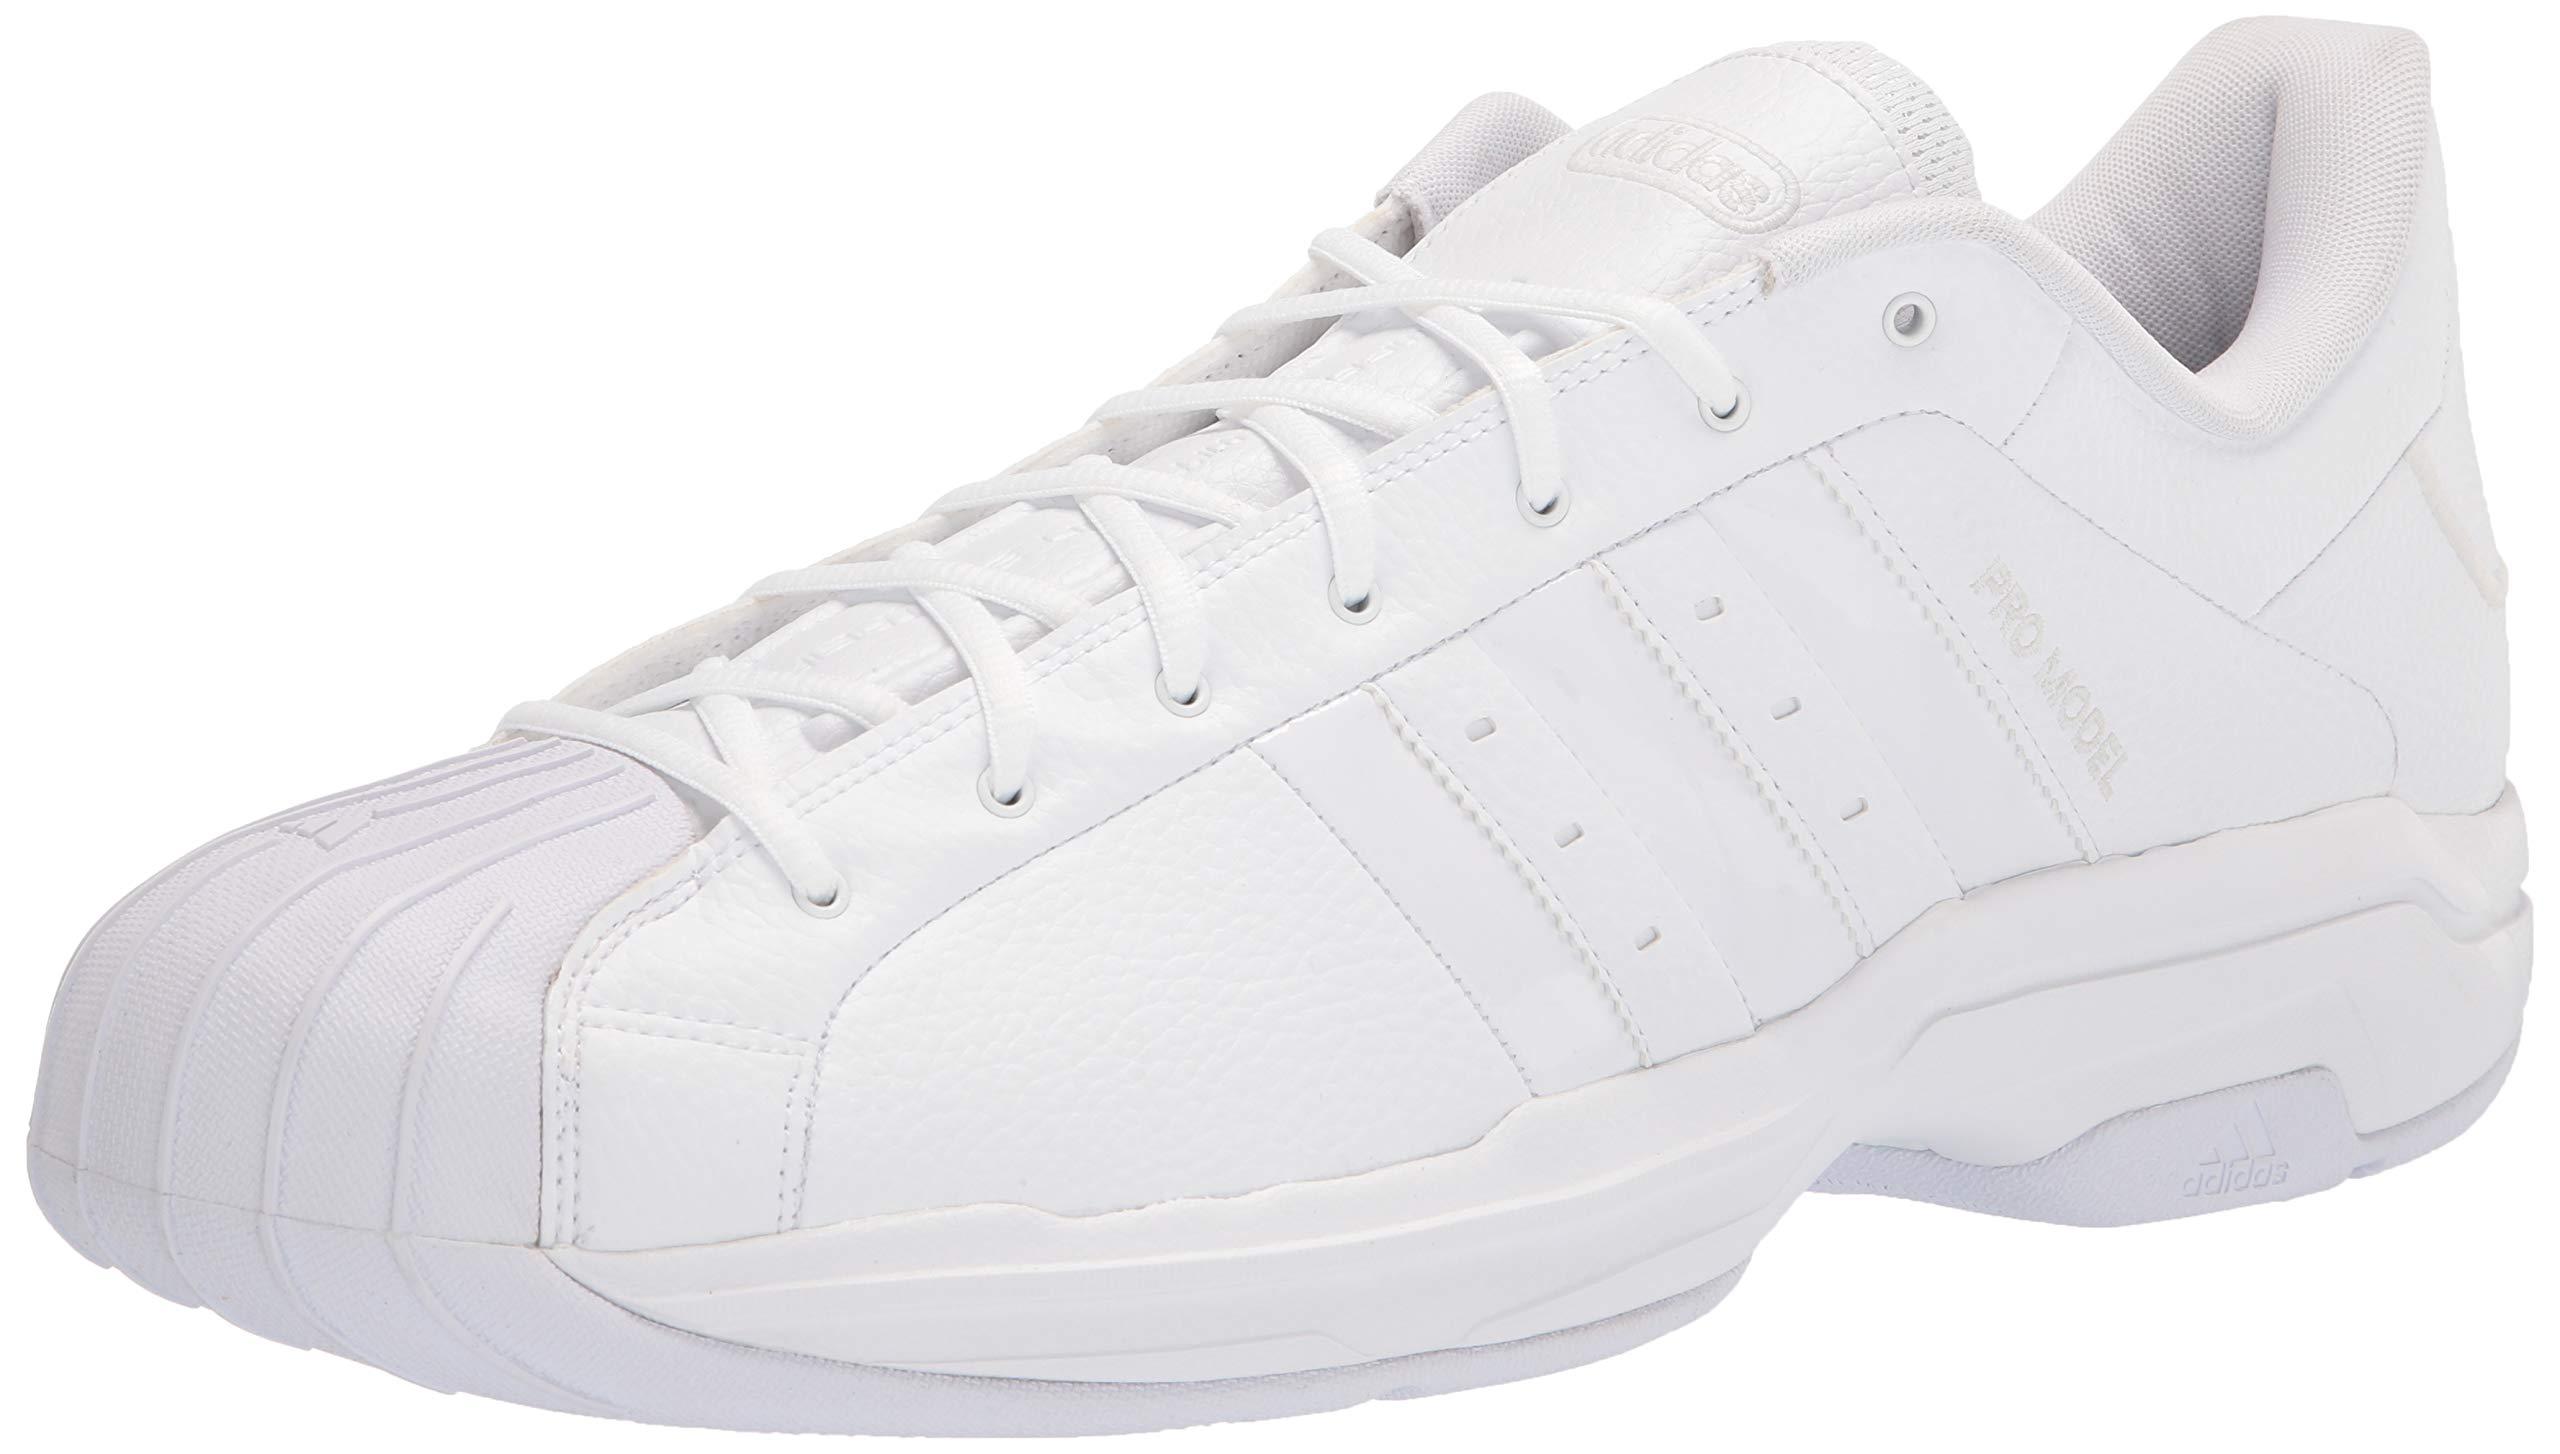 adidas Pro Model 2g Low Basketball Shoe in White/White/White (Black) for  Men - Save 49% | Lyst